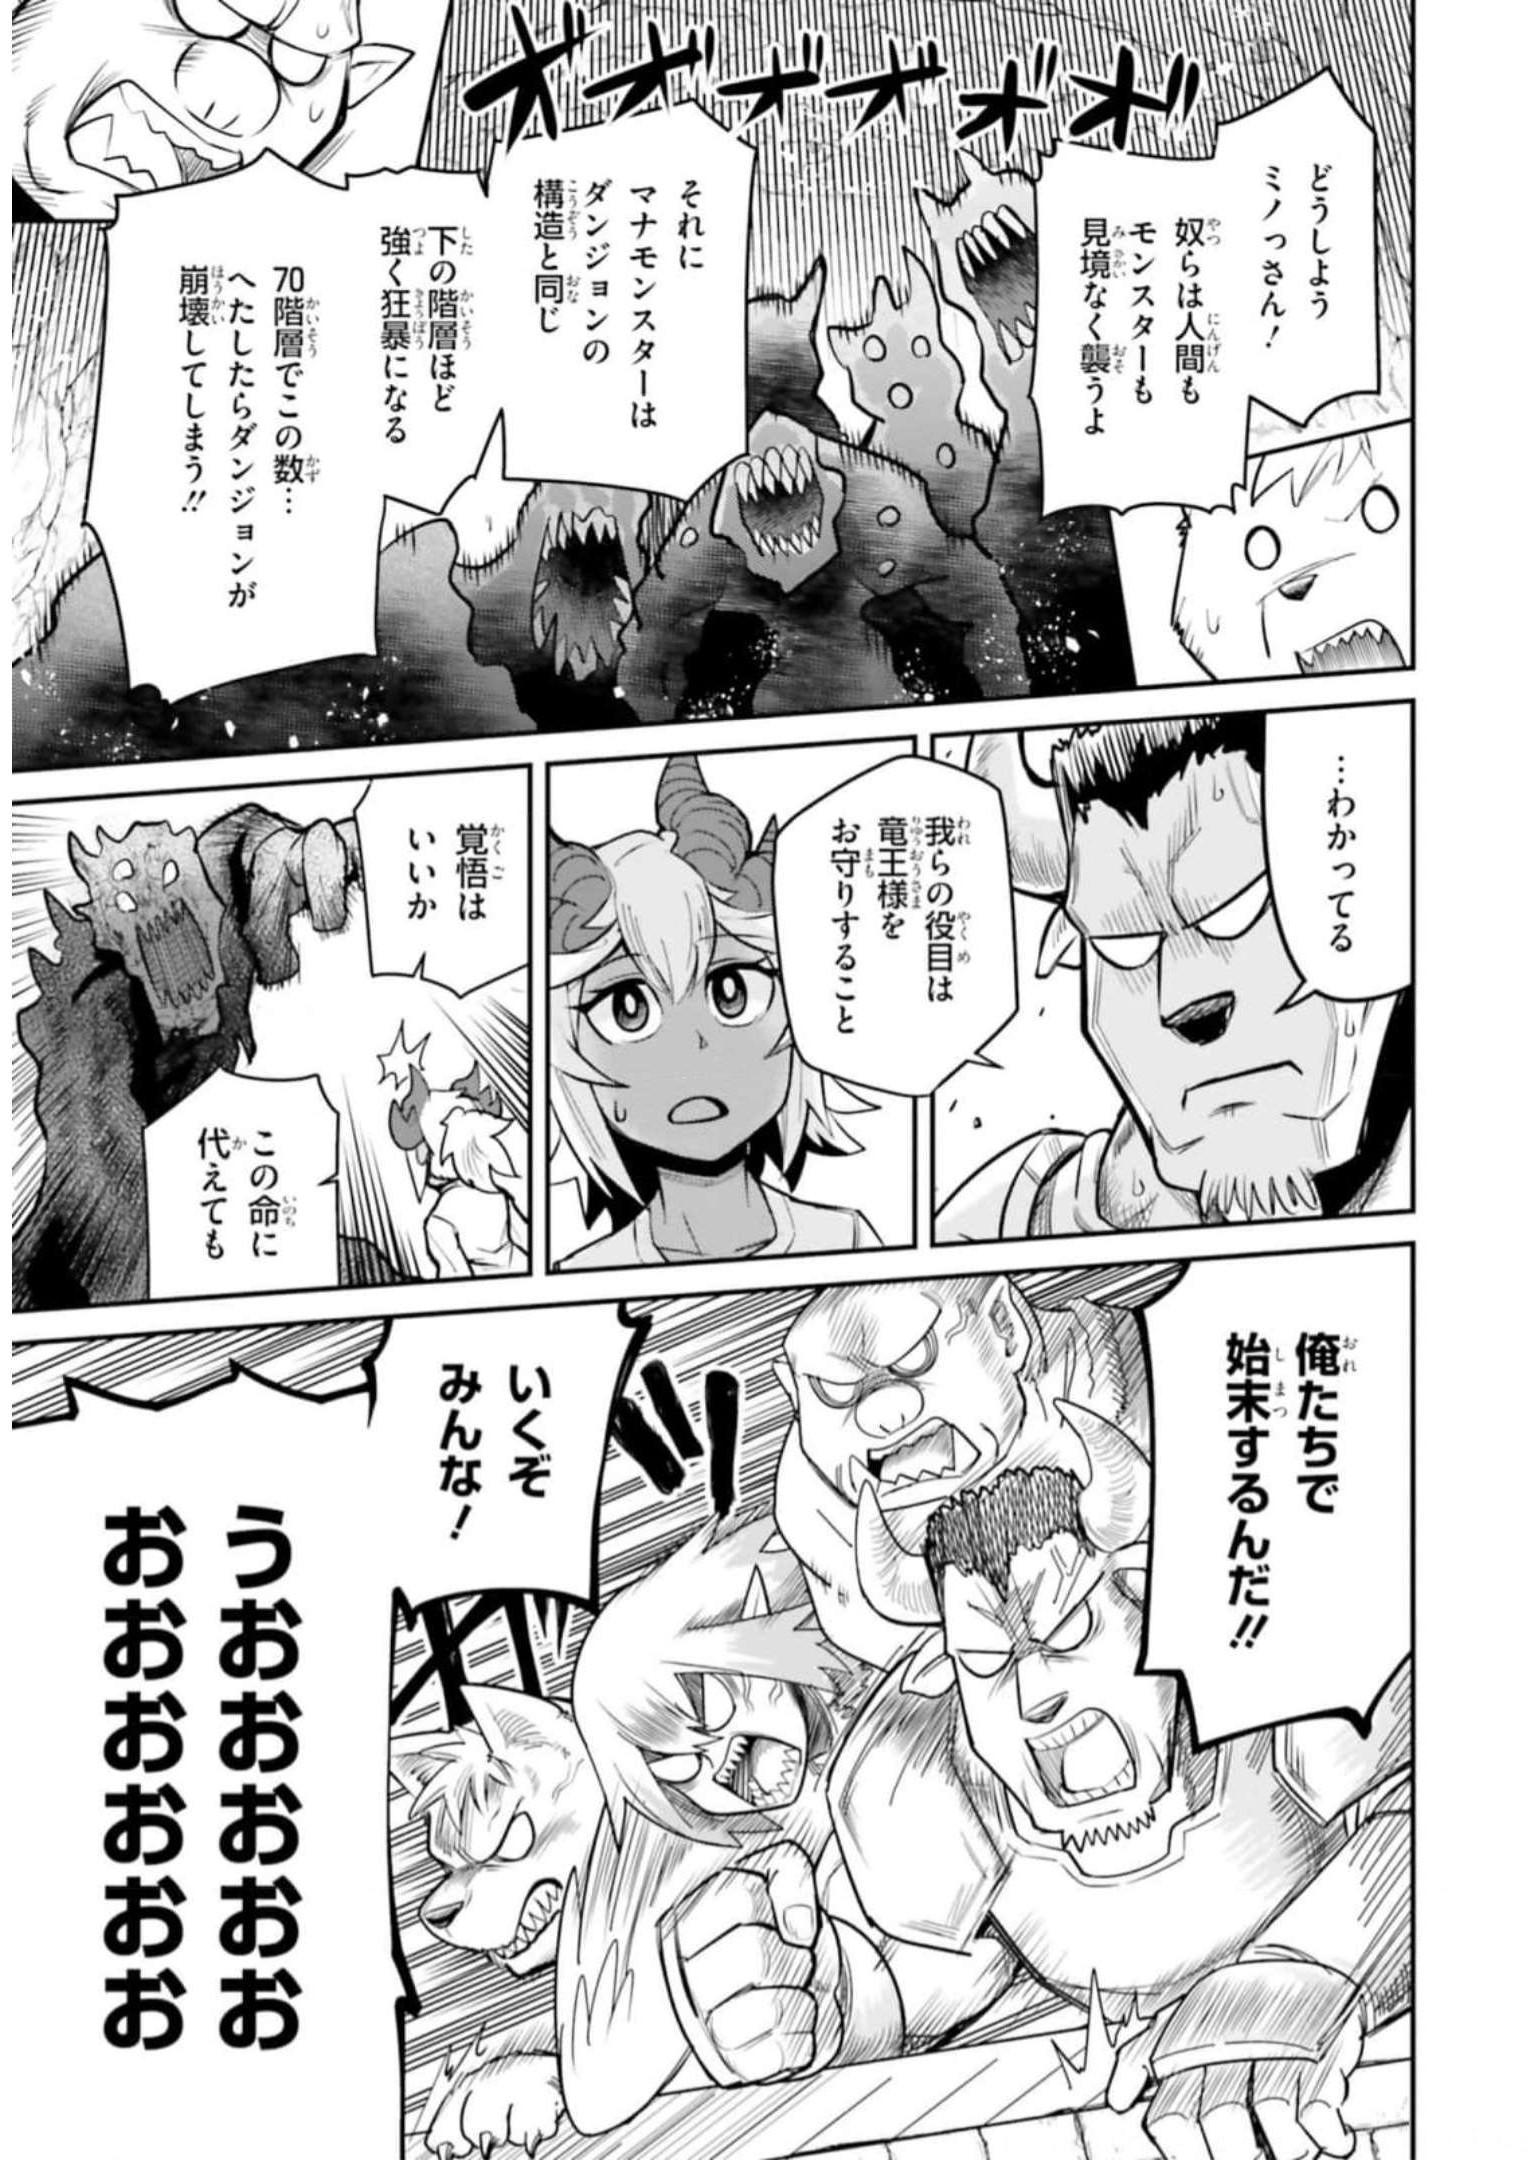 Dungeon no Osananajimi - Chapter 6 - Page 9